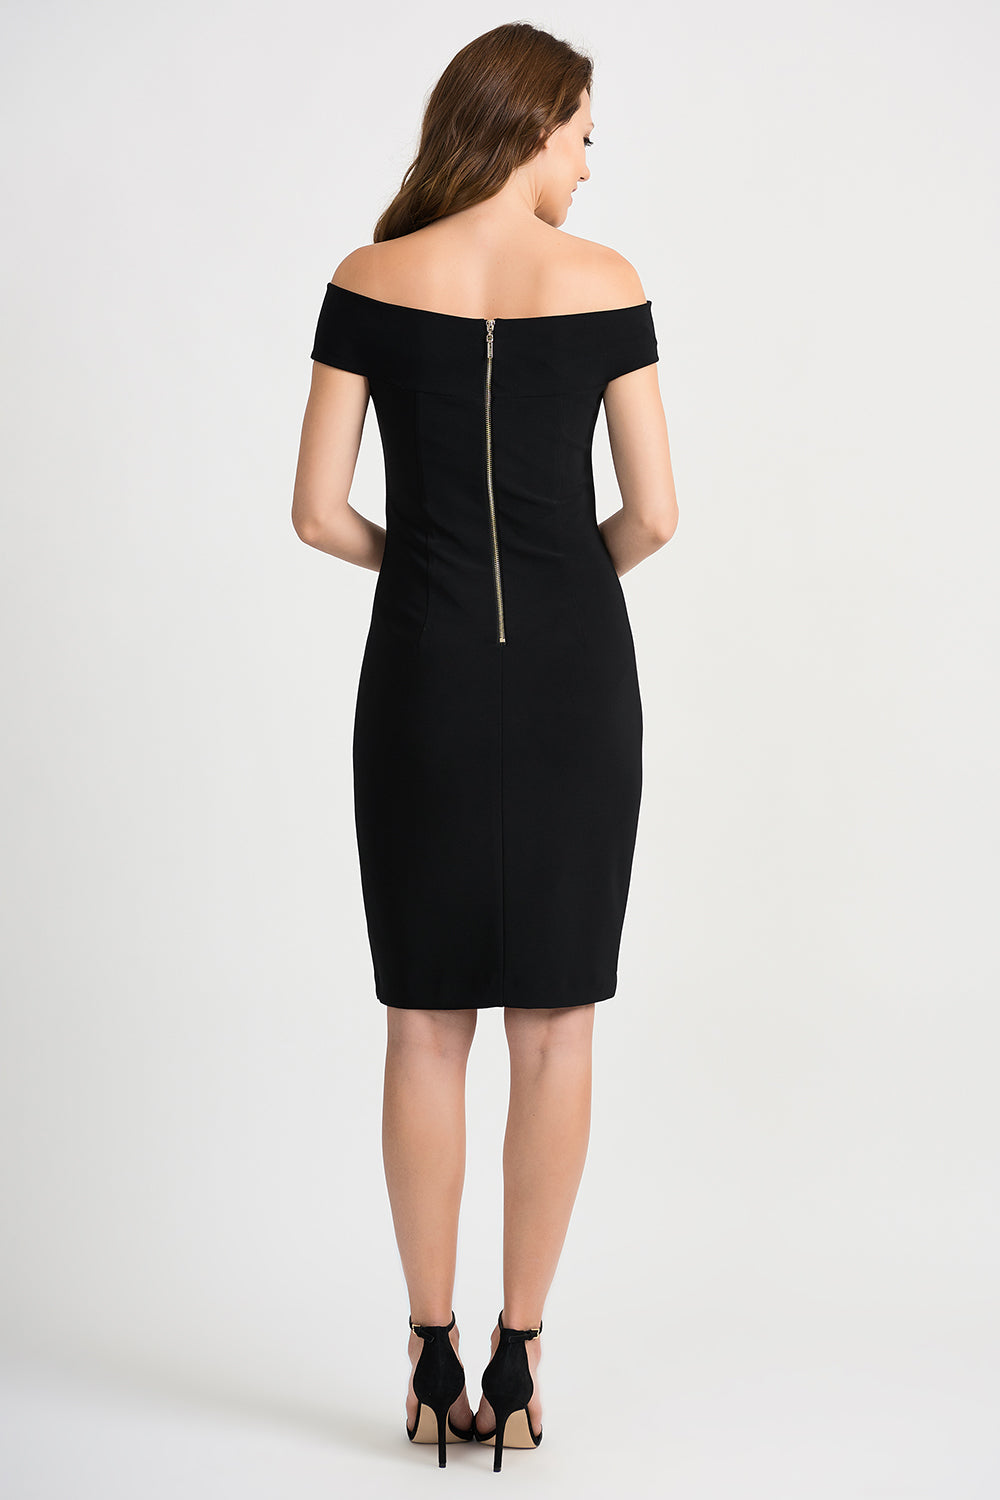 Joseph Ribkoff Multi Dress Style 201520